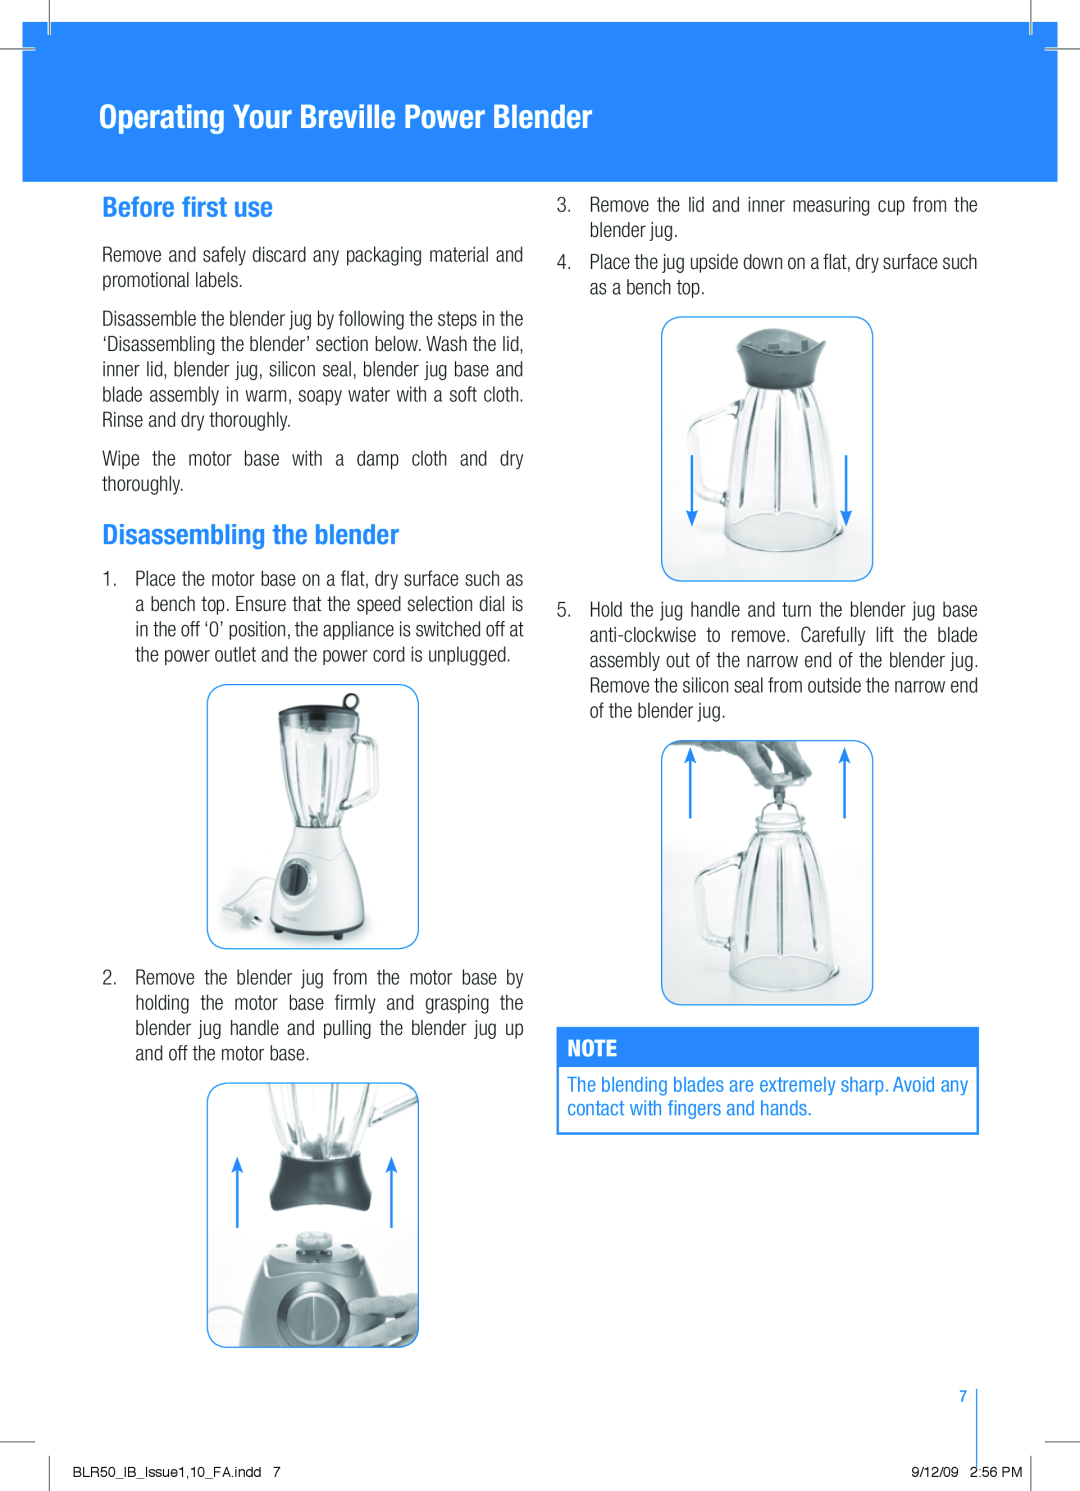 Breville BLR50 manual Operating Your Breville Power Blender, Before first use, Disassembling the blender 